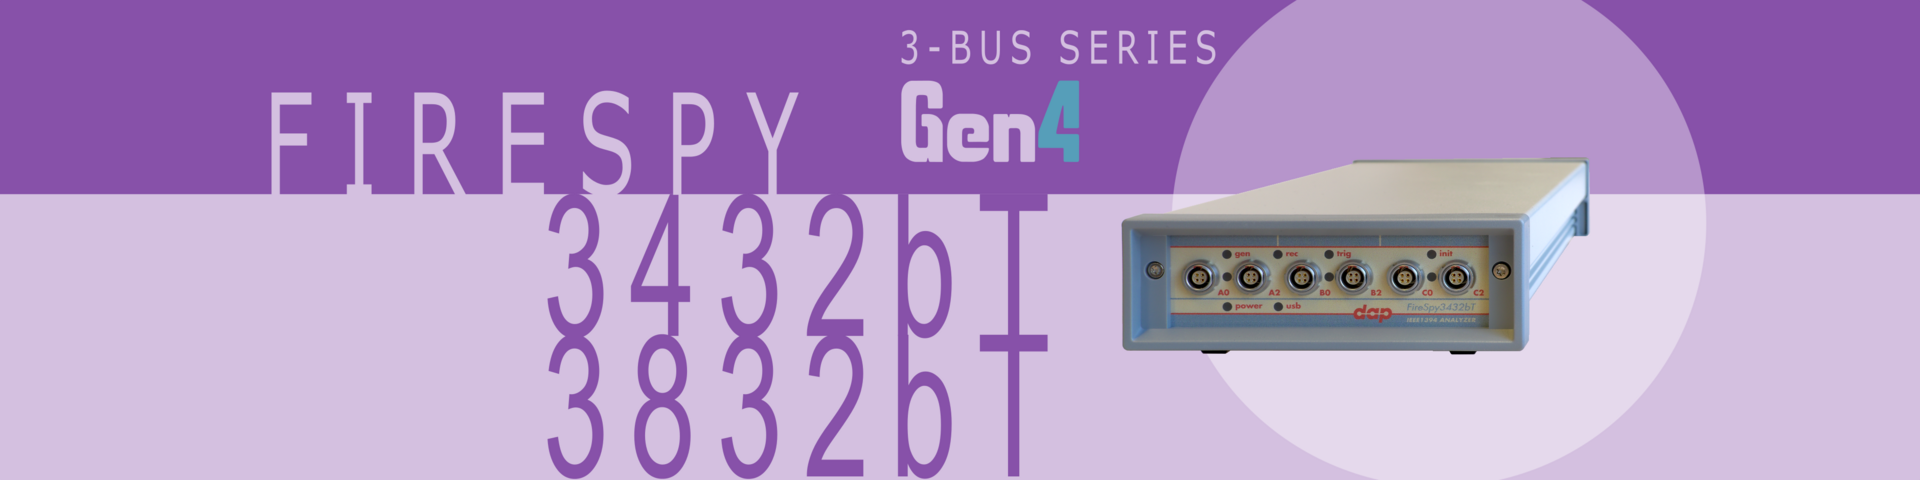 1394 and AS5643 Bus Analyzer - FireSpy3432bT/3832bT